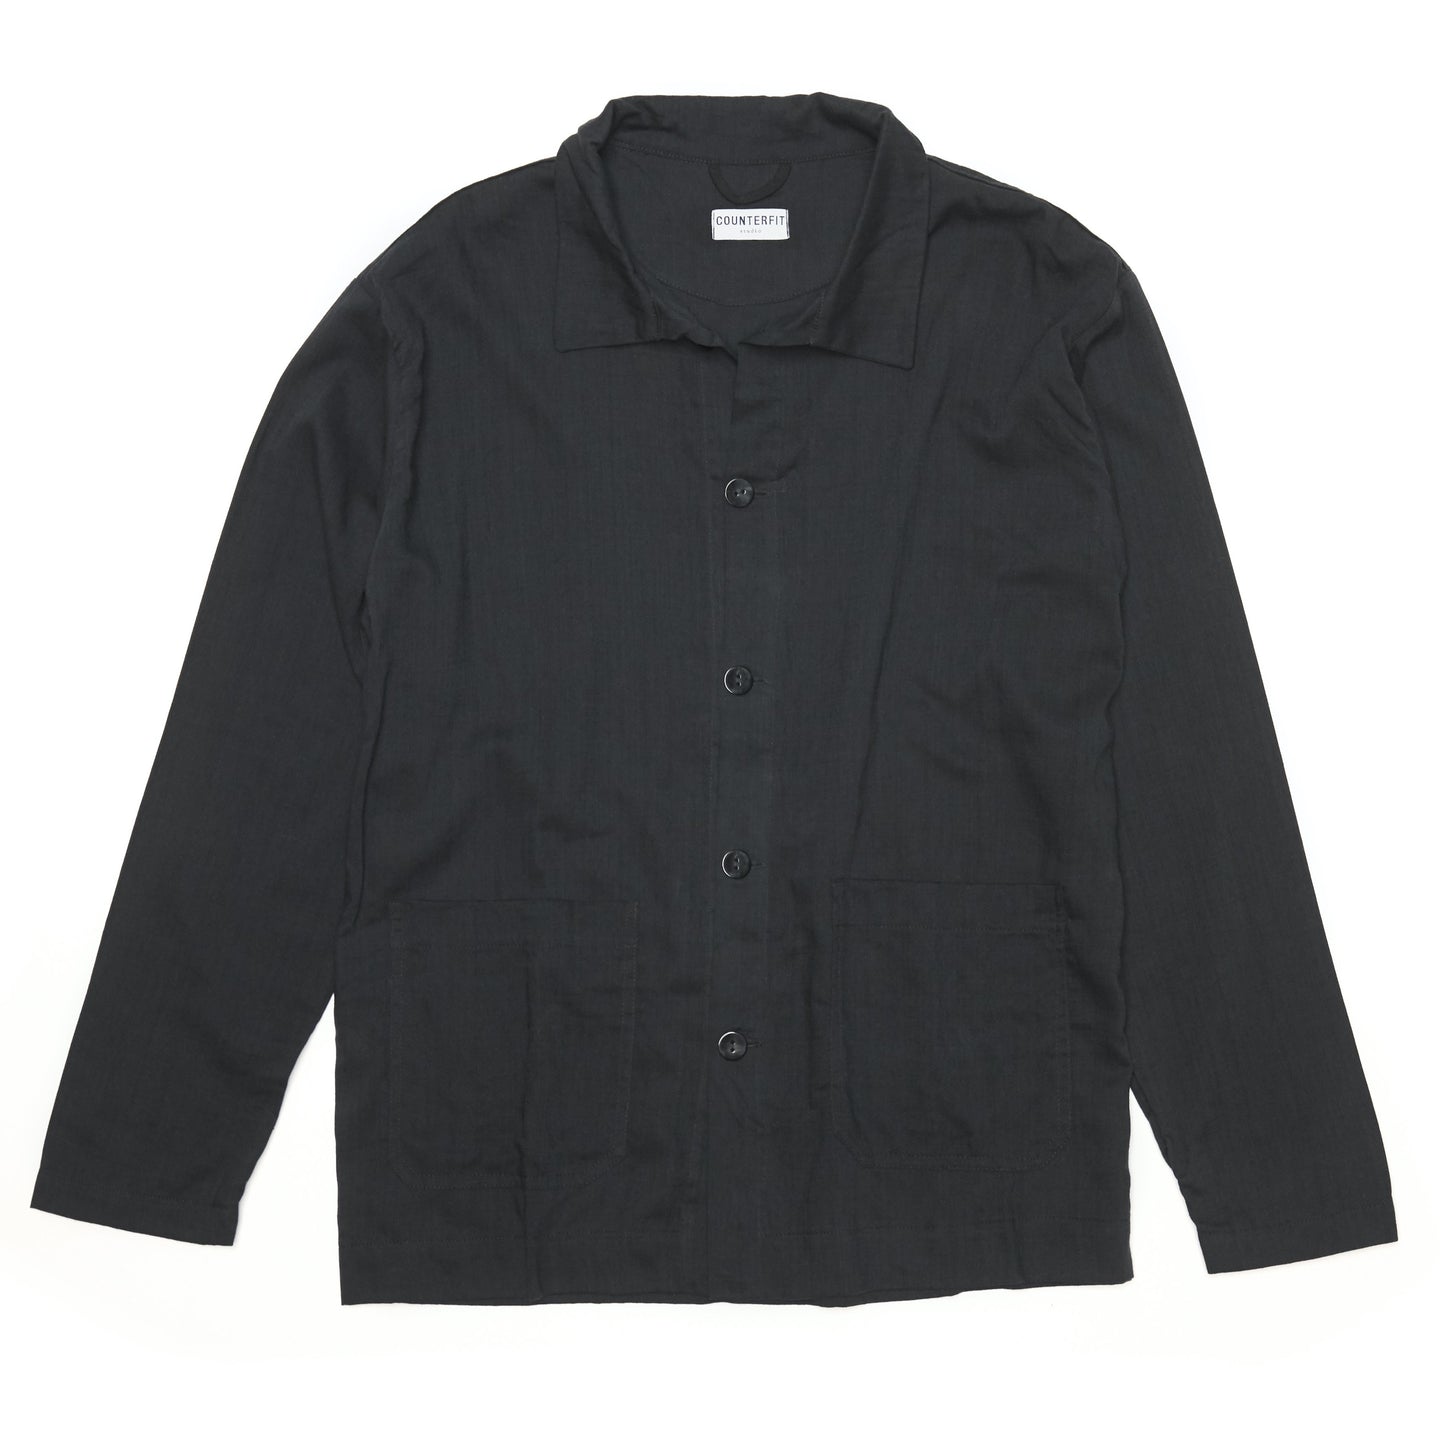 Workwear Jacket in bamboo cotton - counterfitstudio